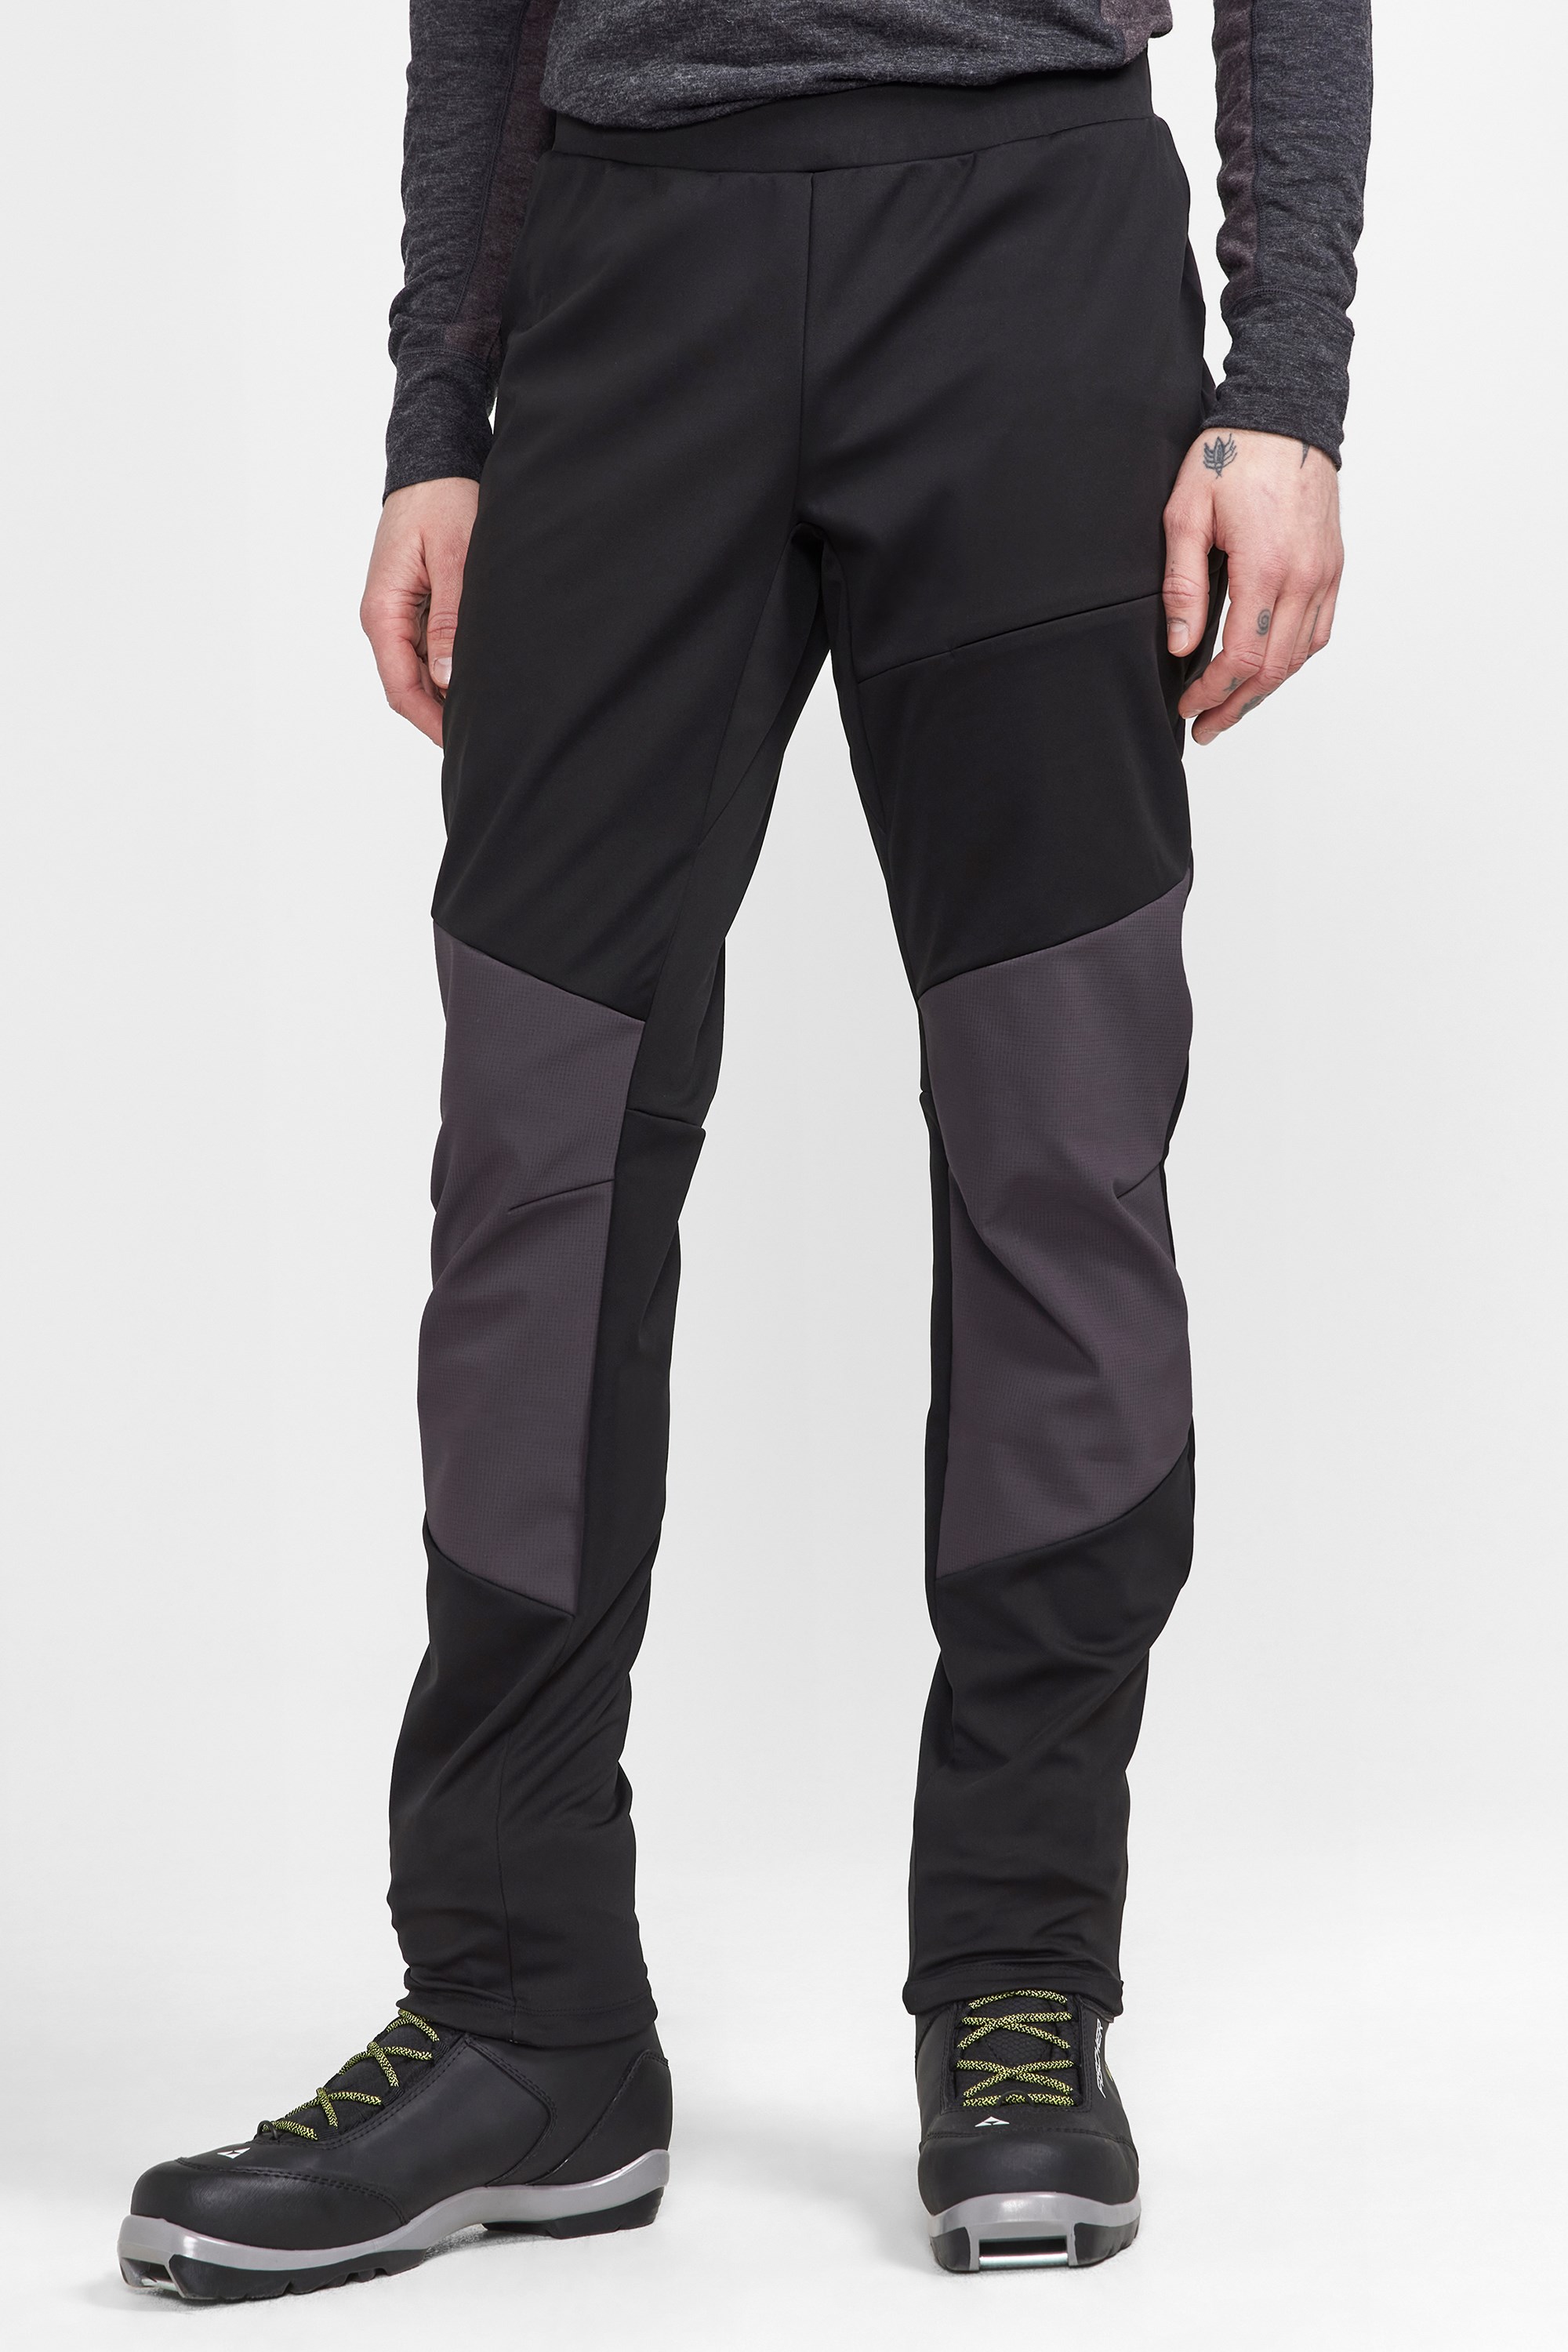 ADV Backcountry Mens Hybrid Pants -